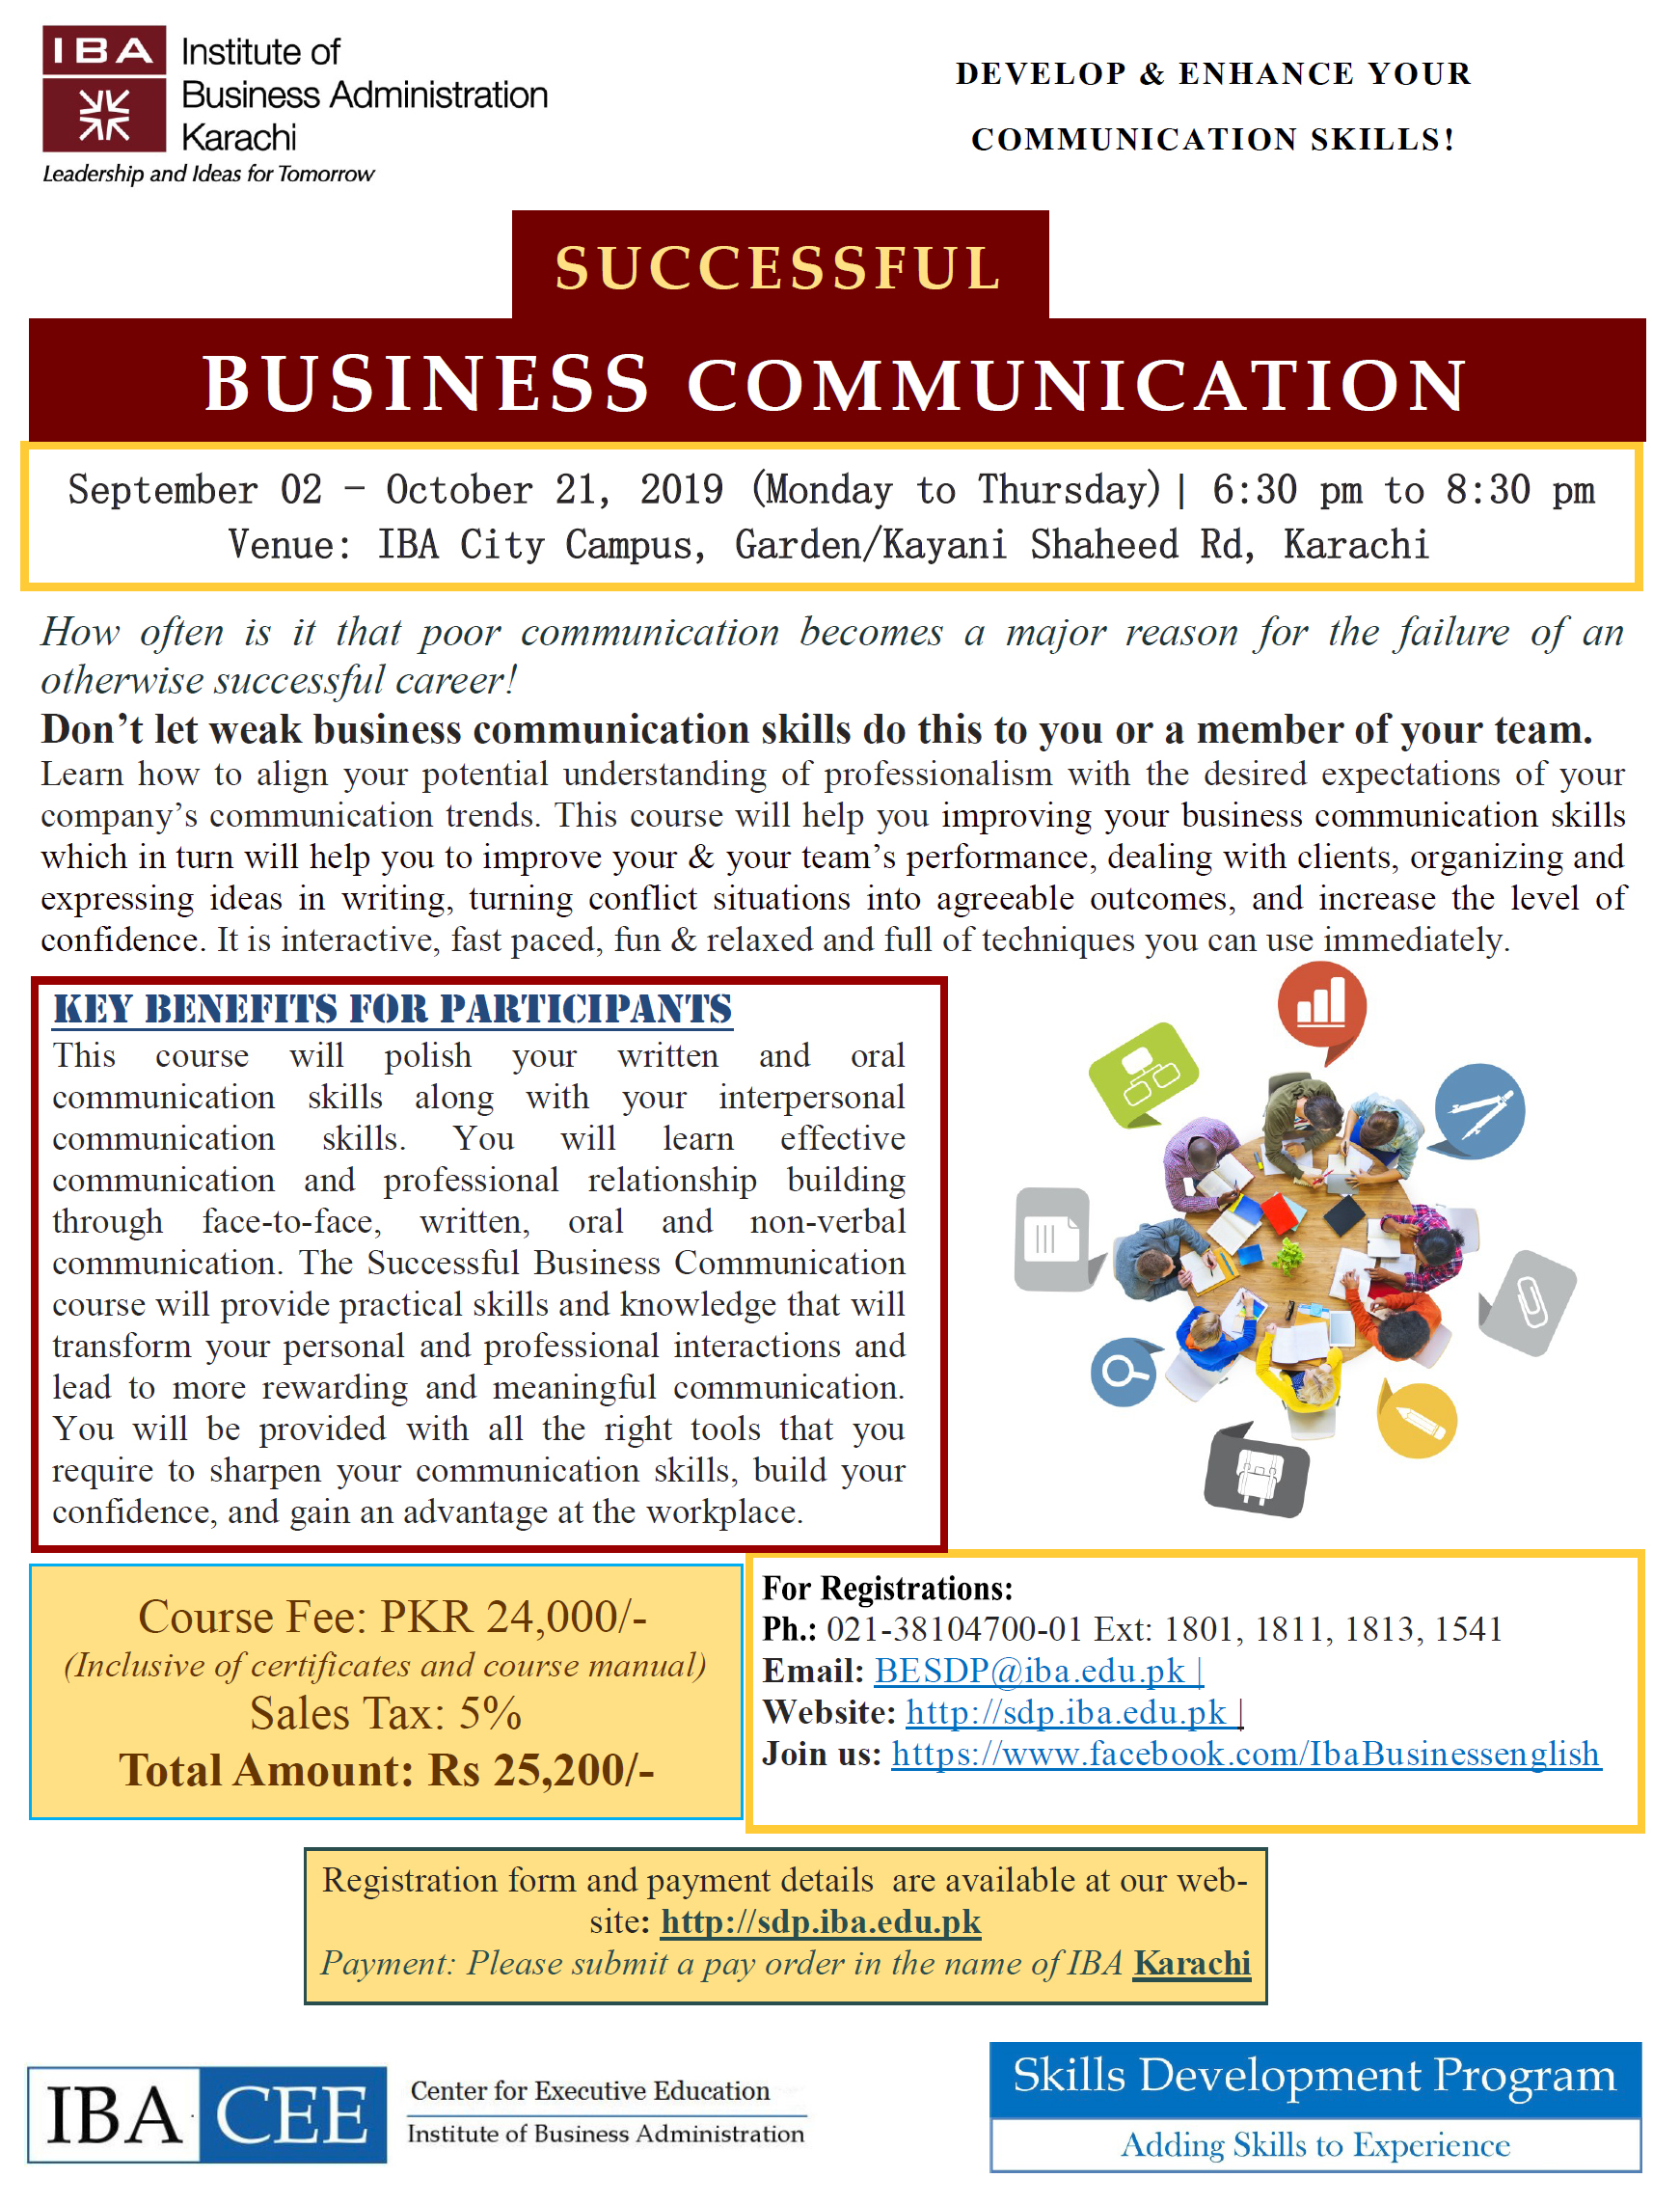 Successful Business Communication